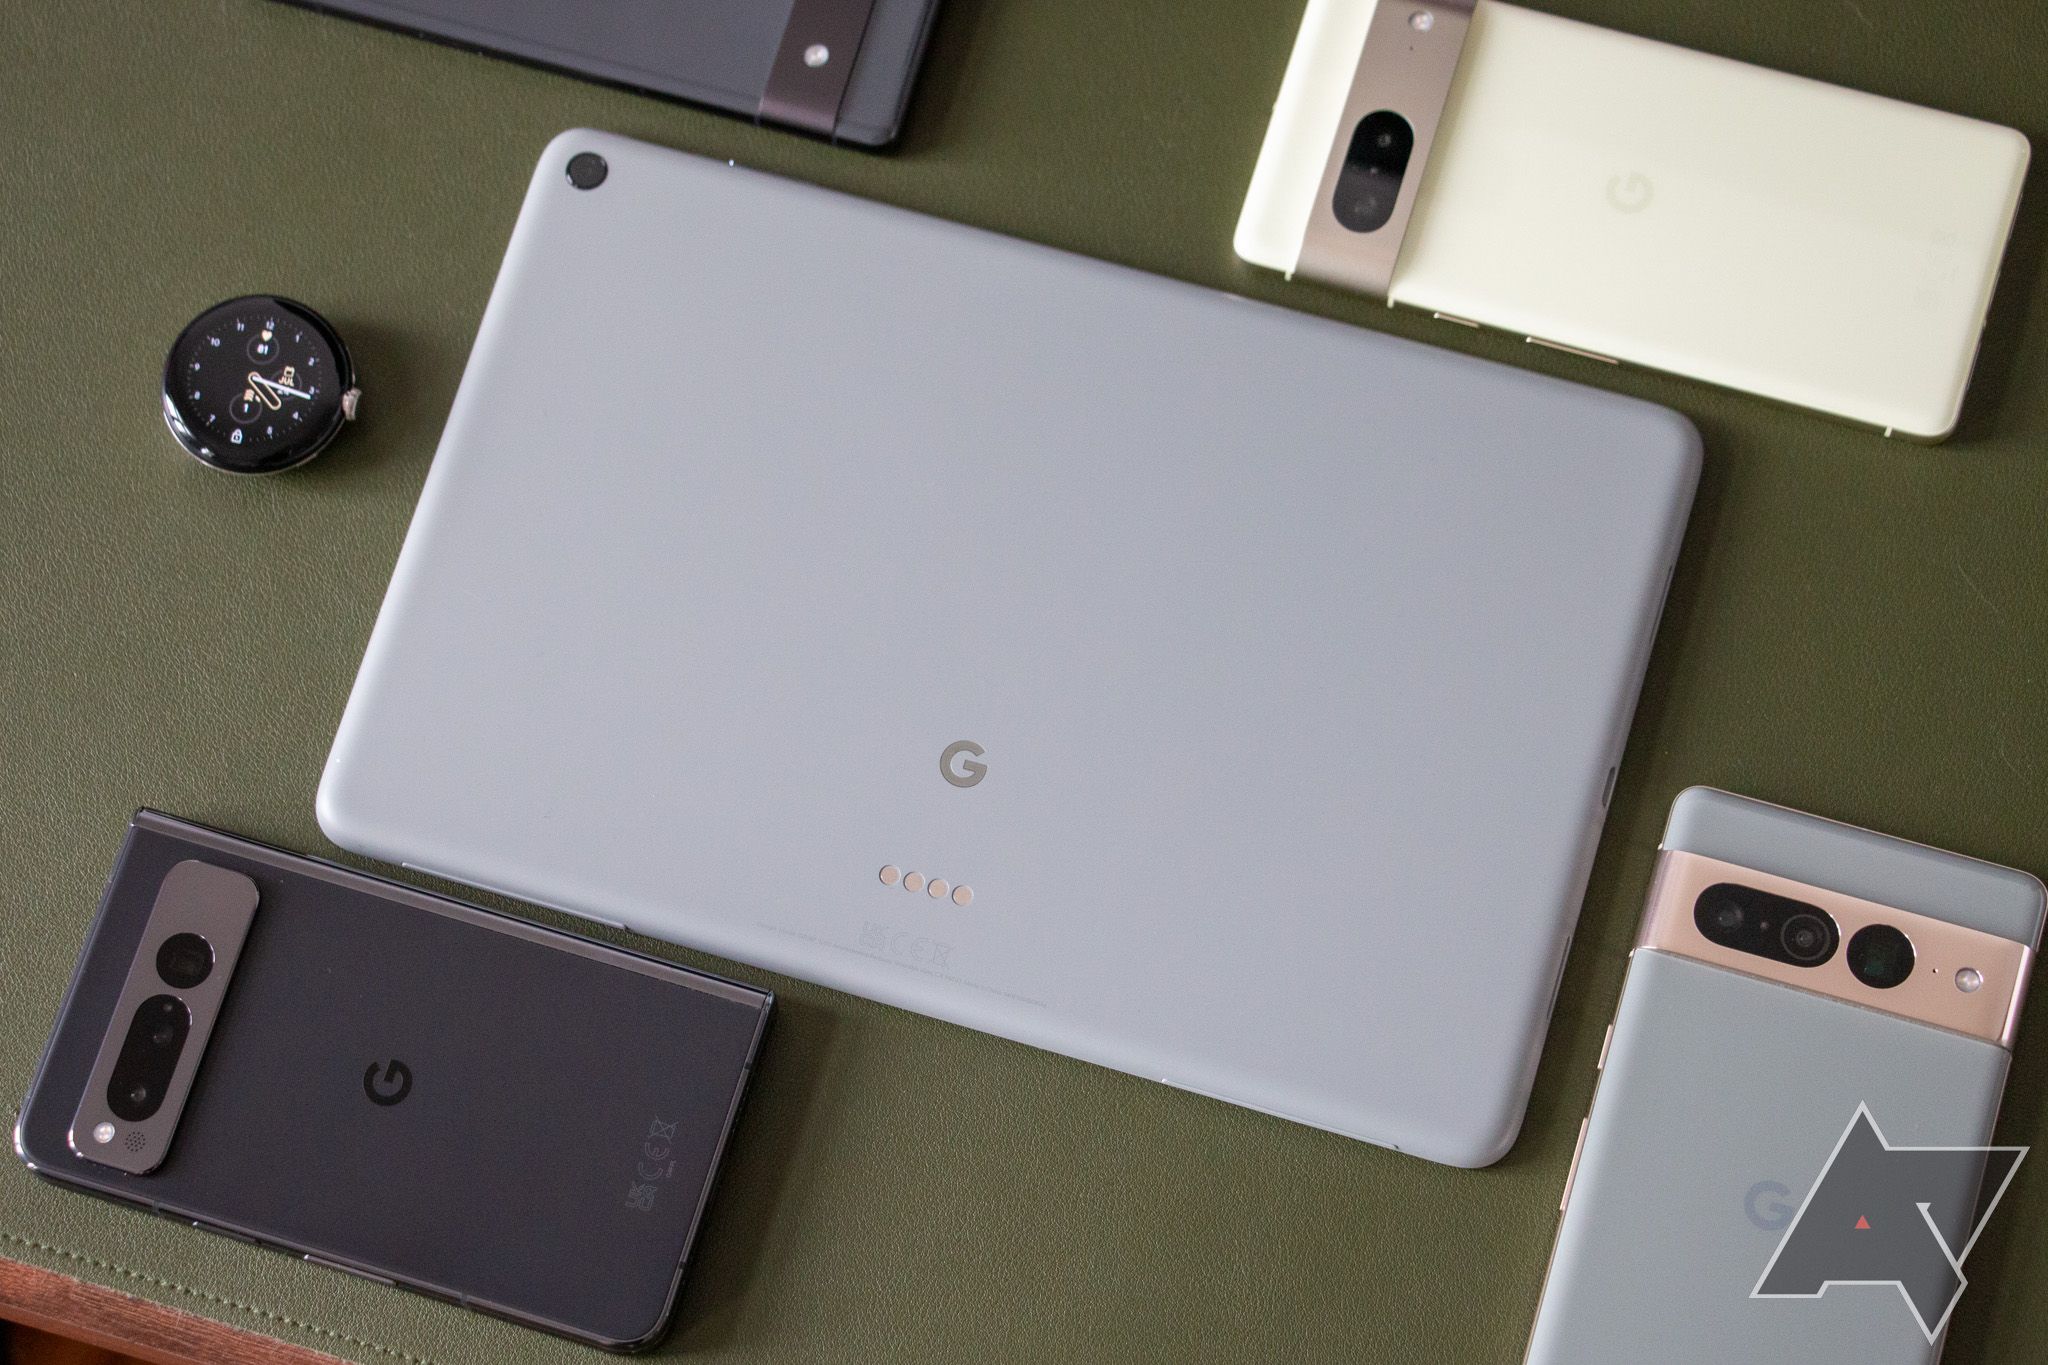 Pixel Tablet Promotion Appears On Google Home App